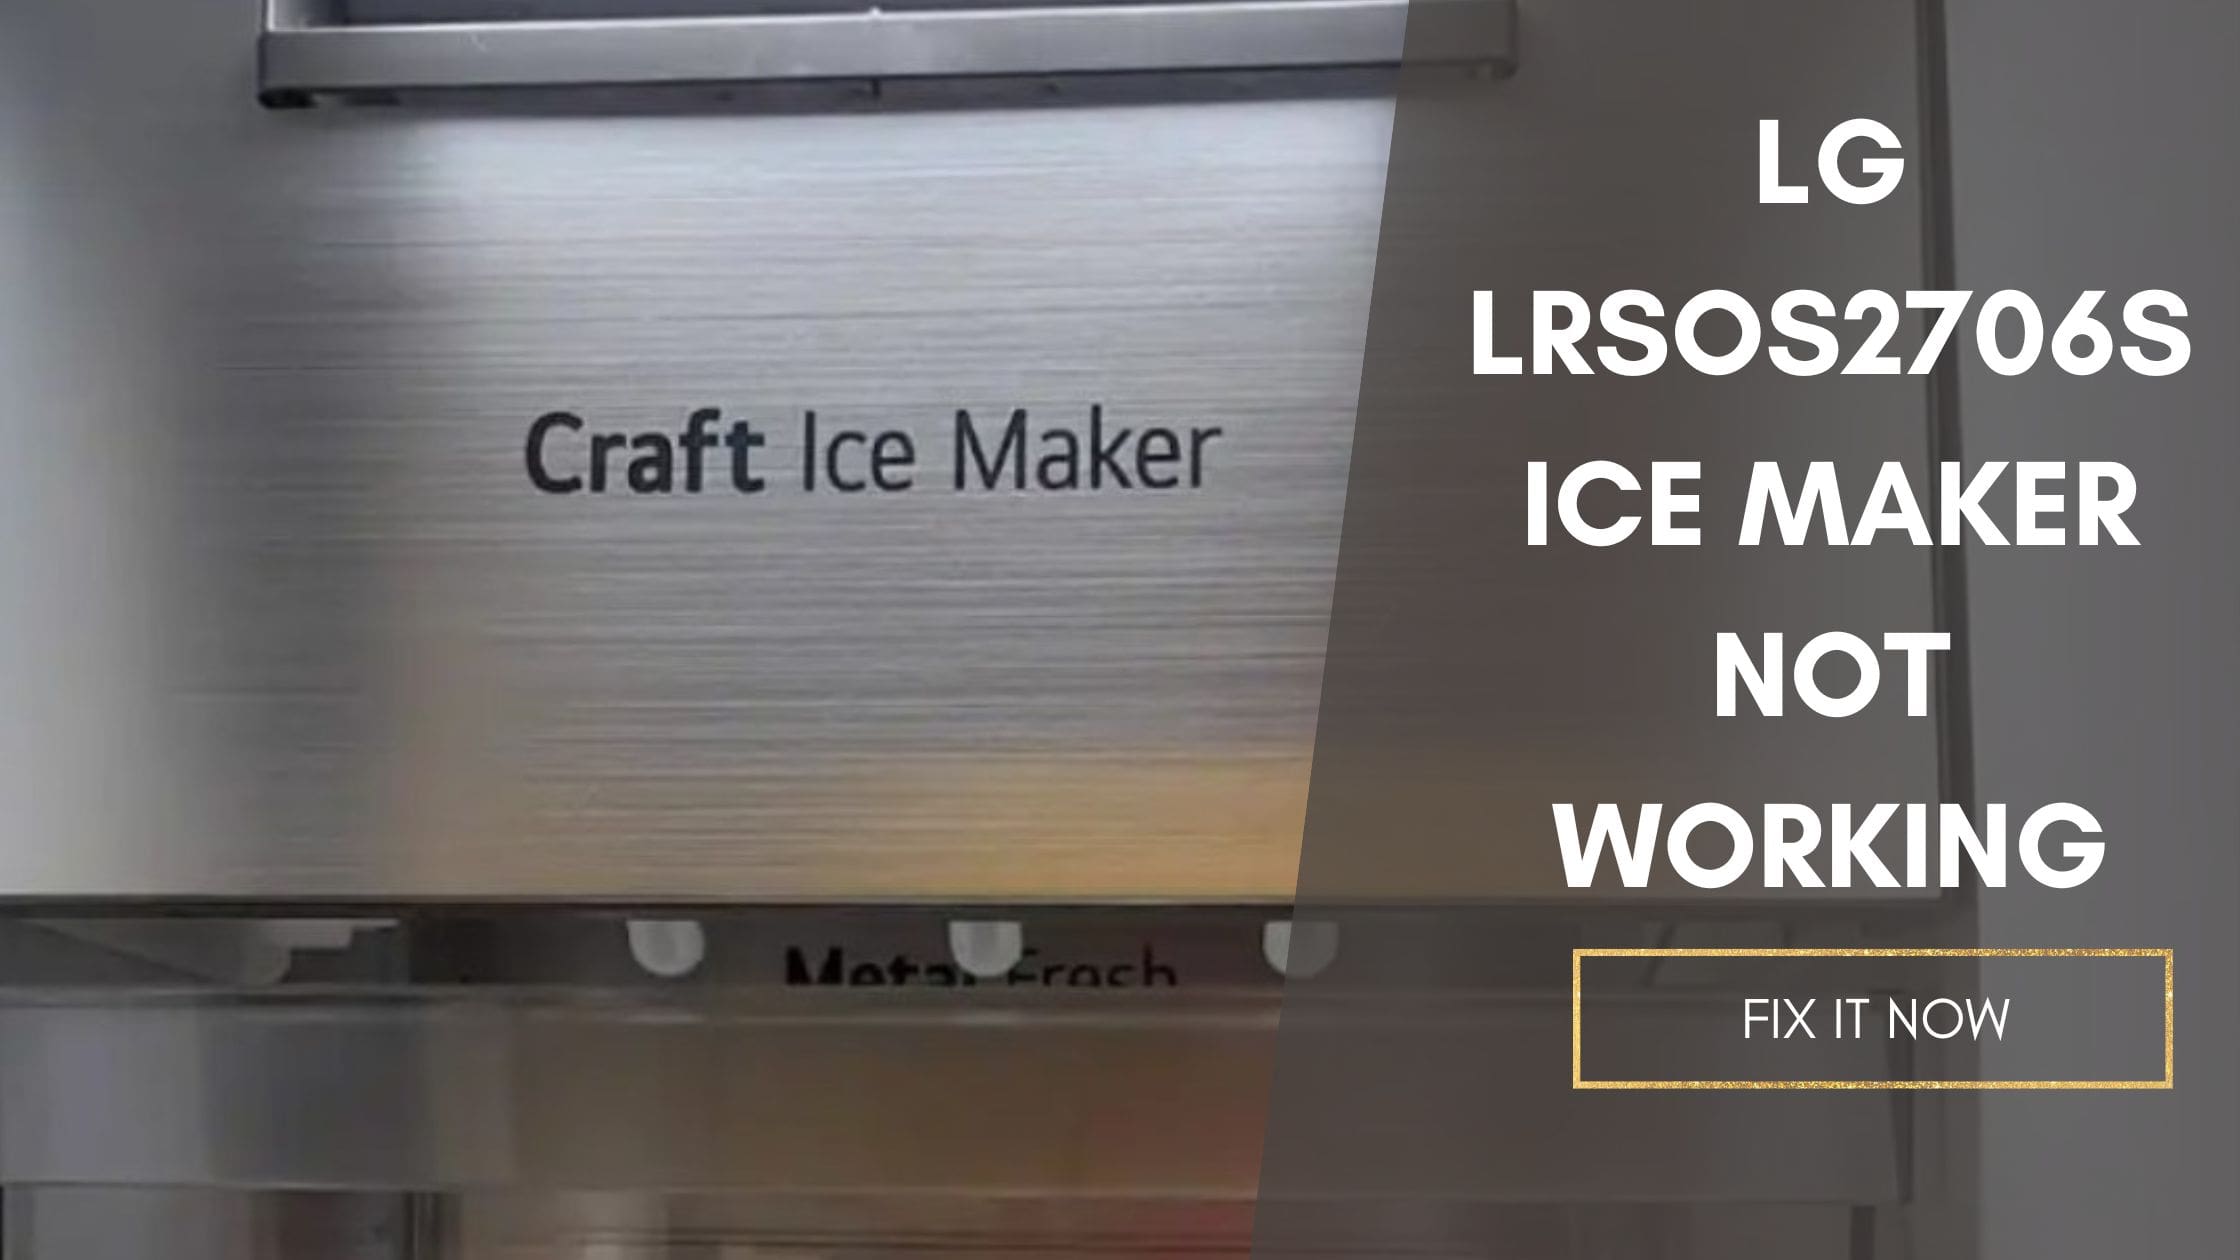 LG LRSOS2706S Ice Maker not working